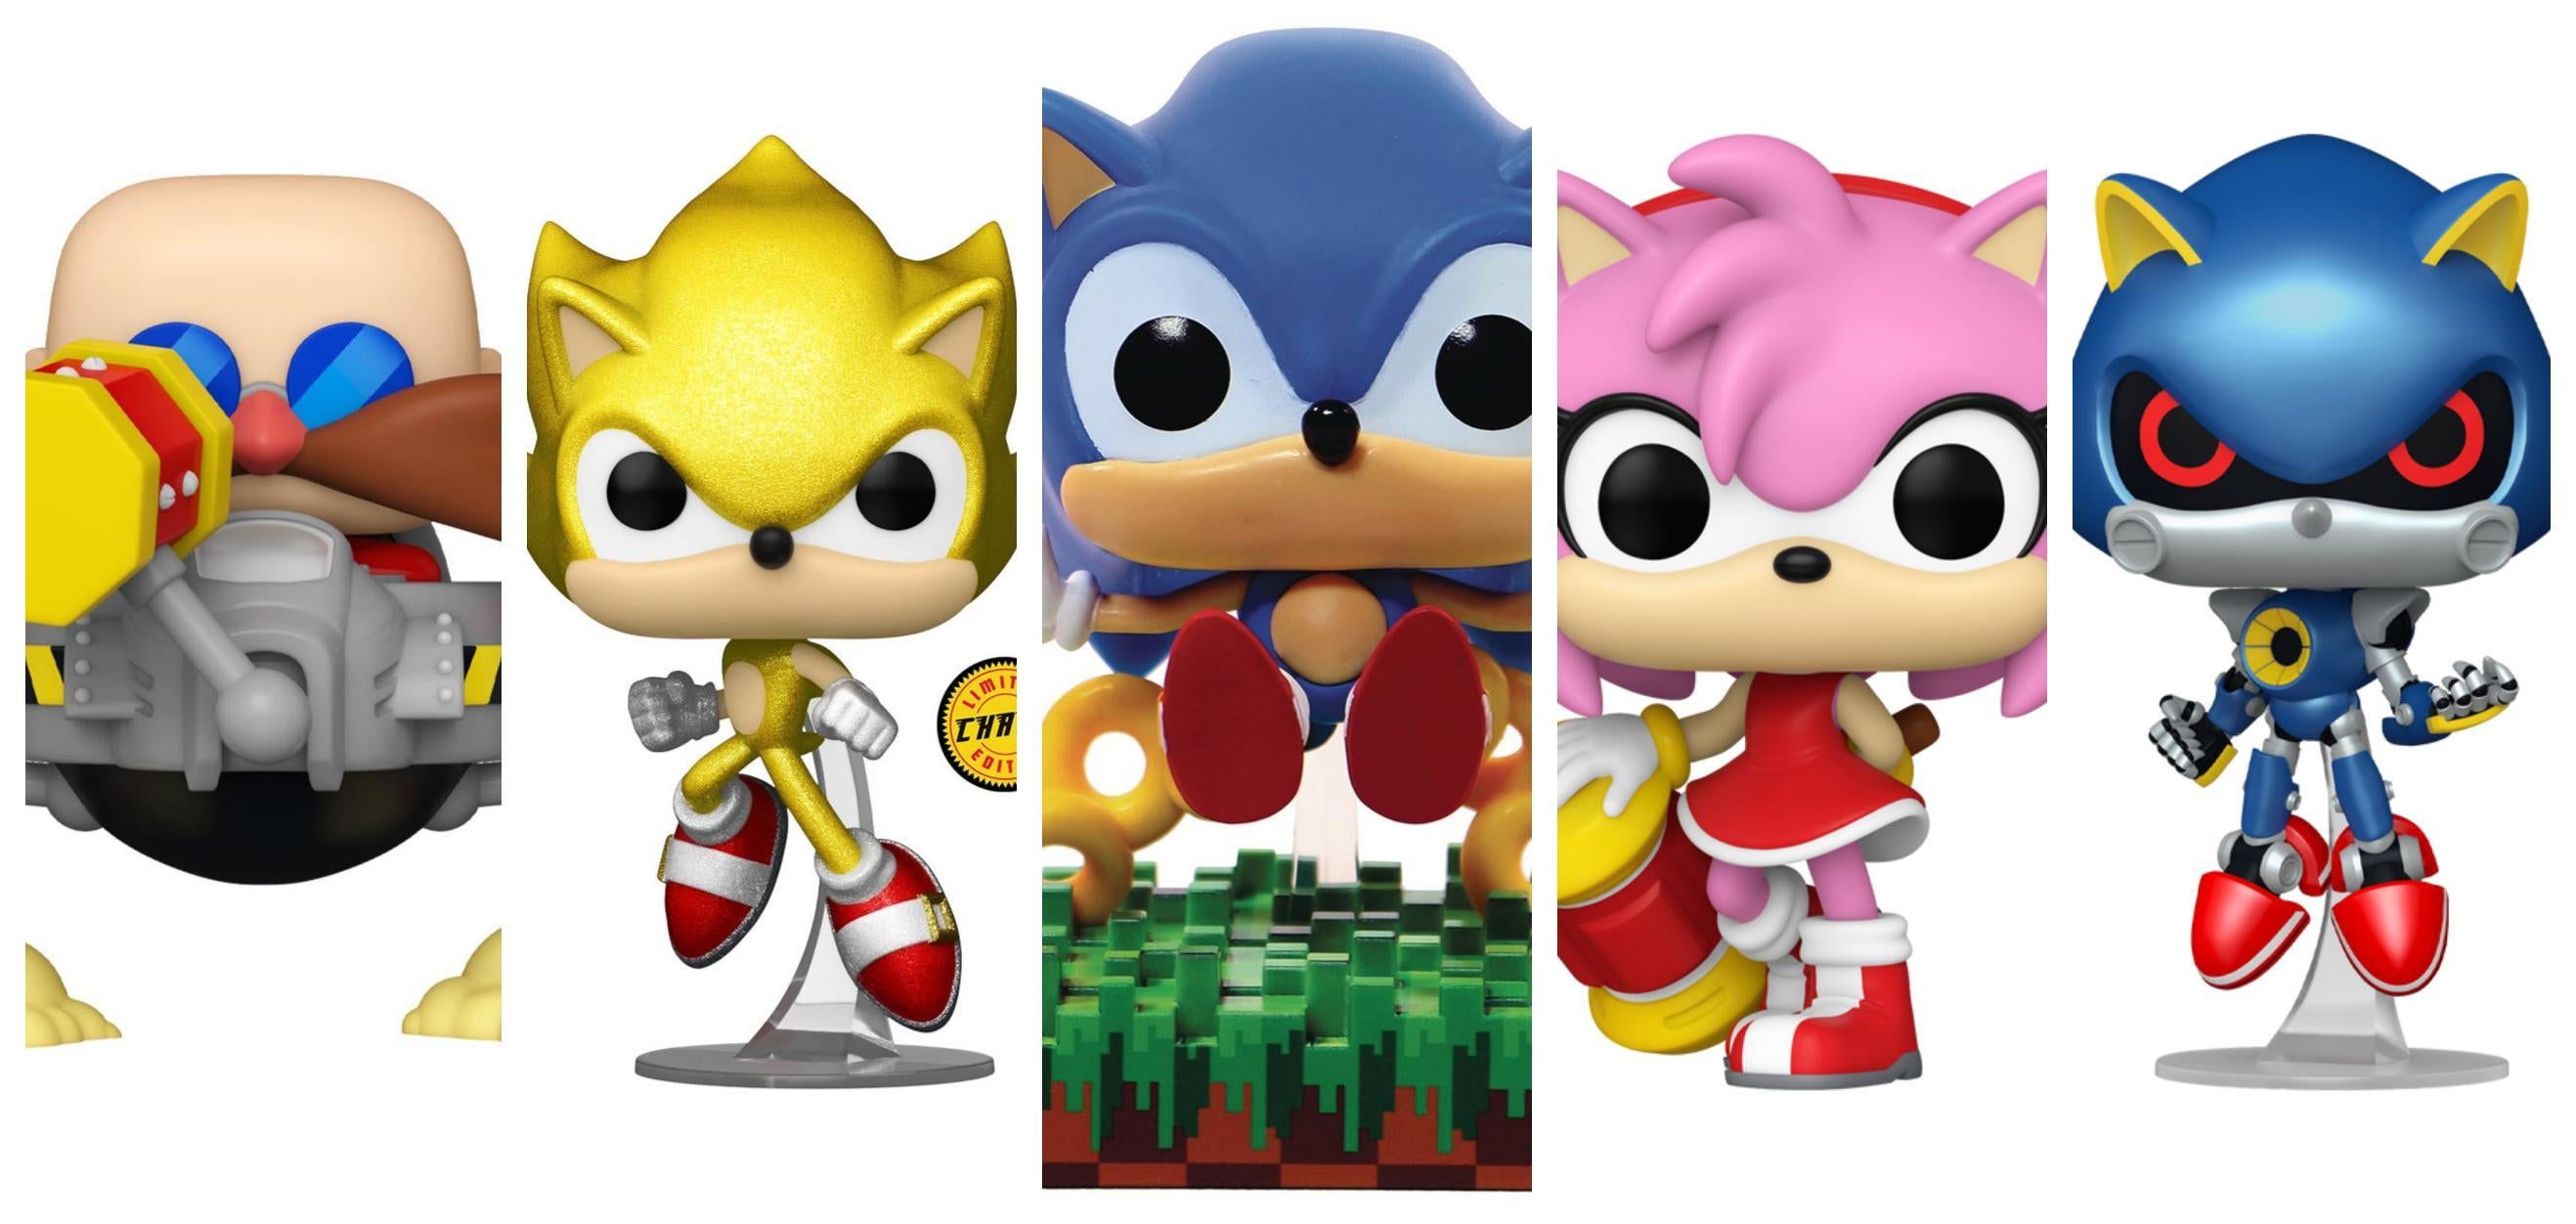 SEGA Reveals Sonic The Hedgehog Double Packs For Nintendo Switch